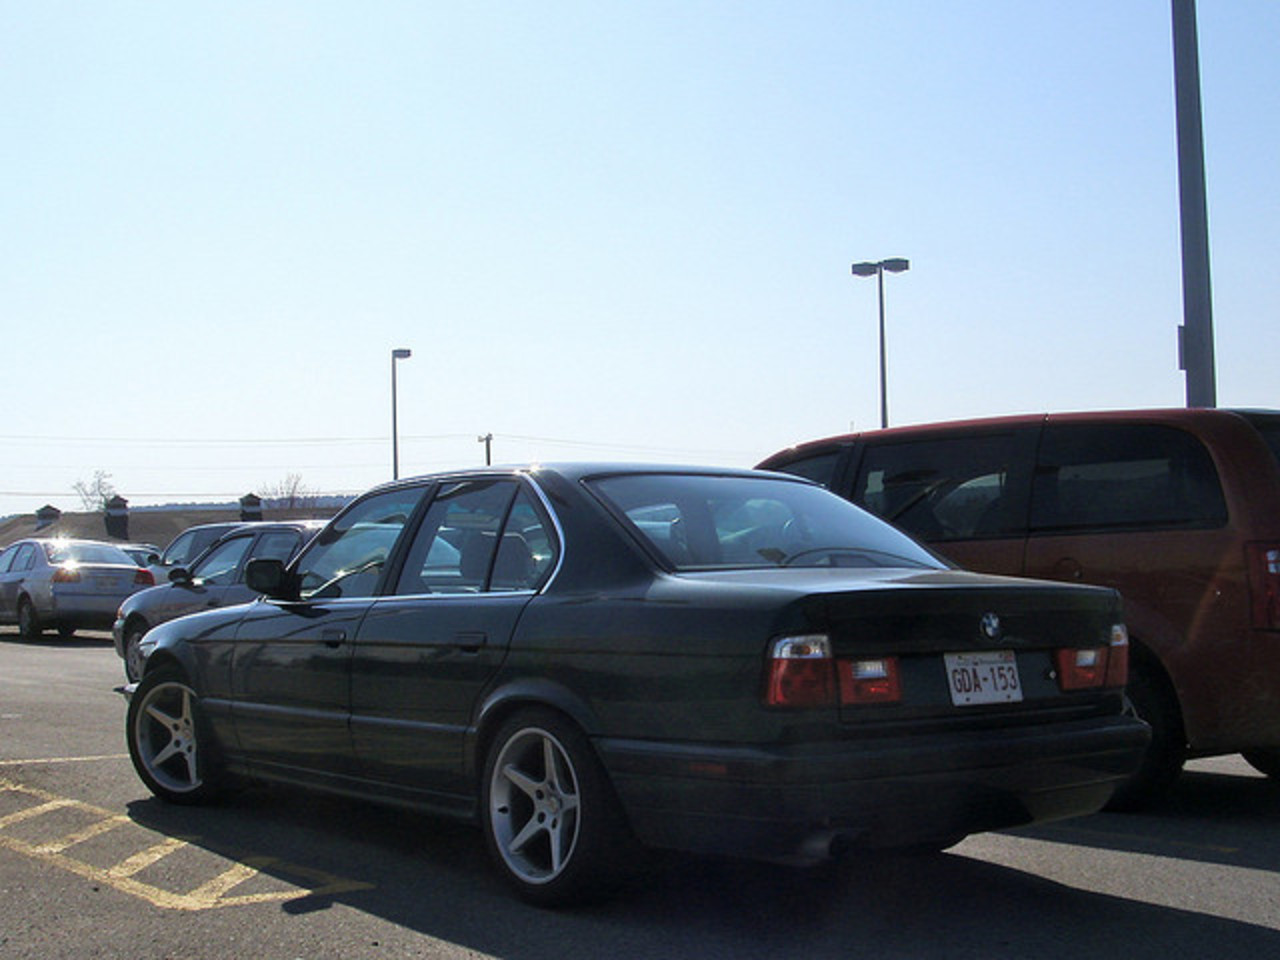 1992 BMW 525i (E34) | Flickr - Photo Sharing!